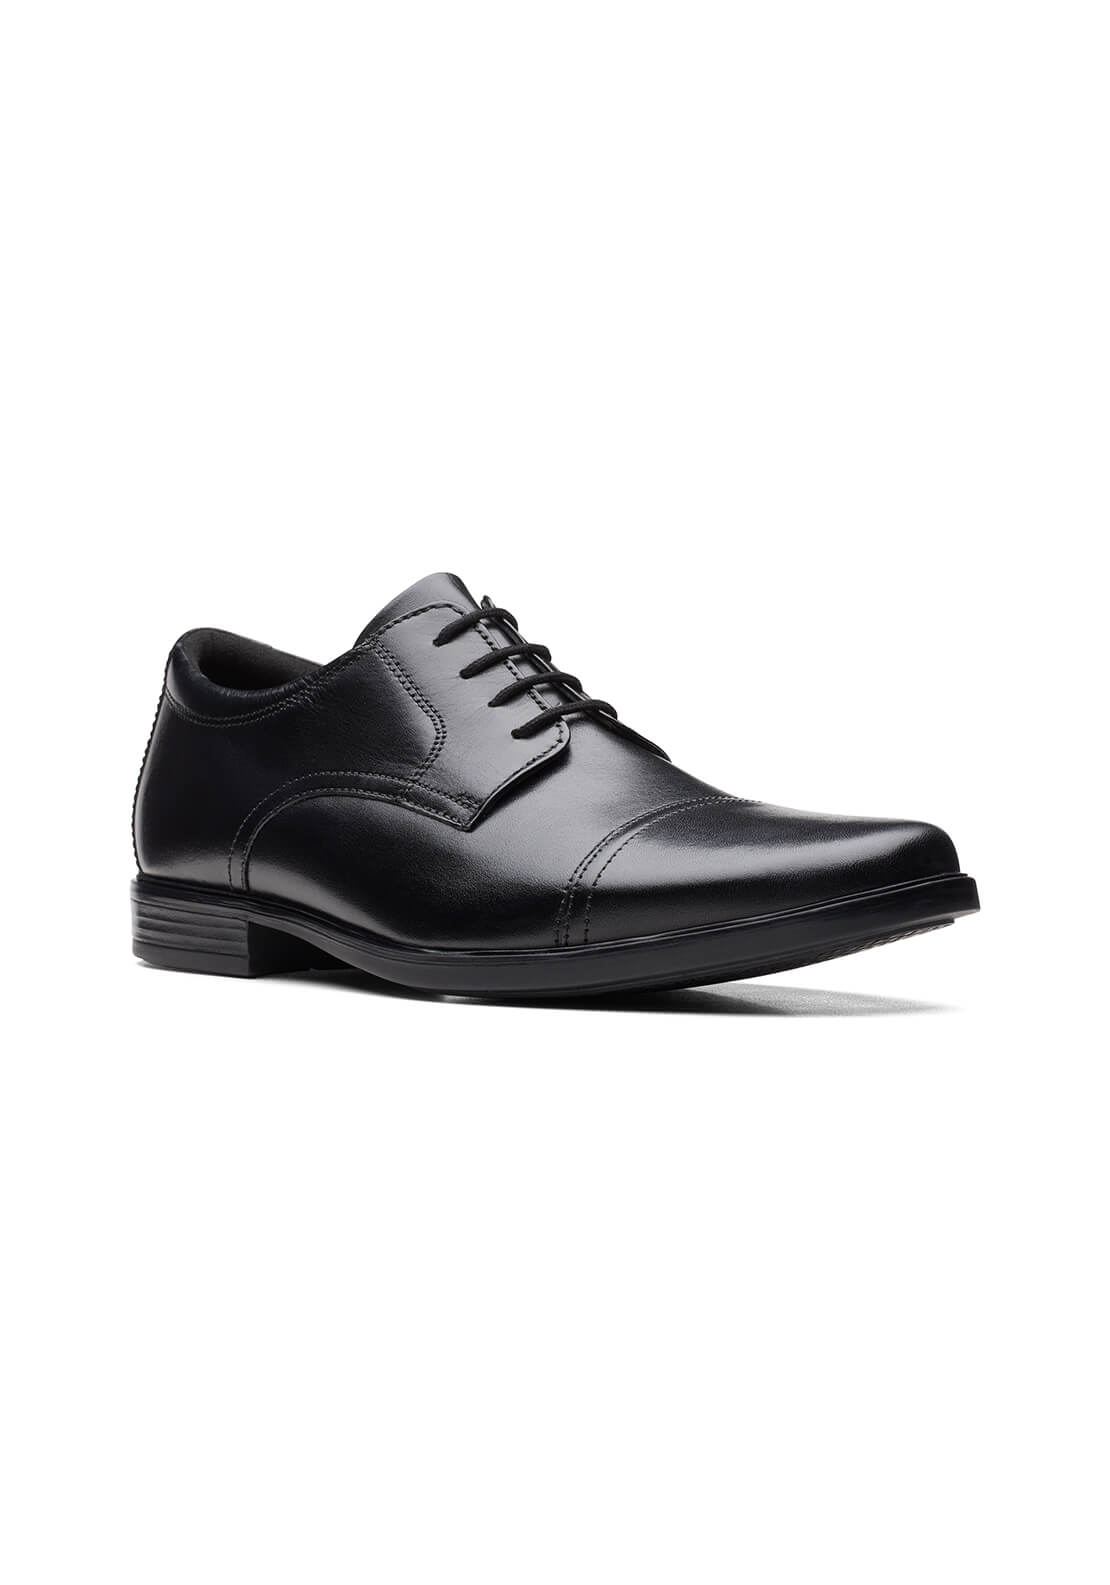 Clarks Howard Cap Formal Shoe - Black 1 Shaws Department Stores